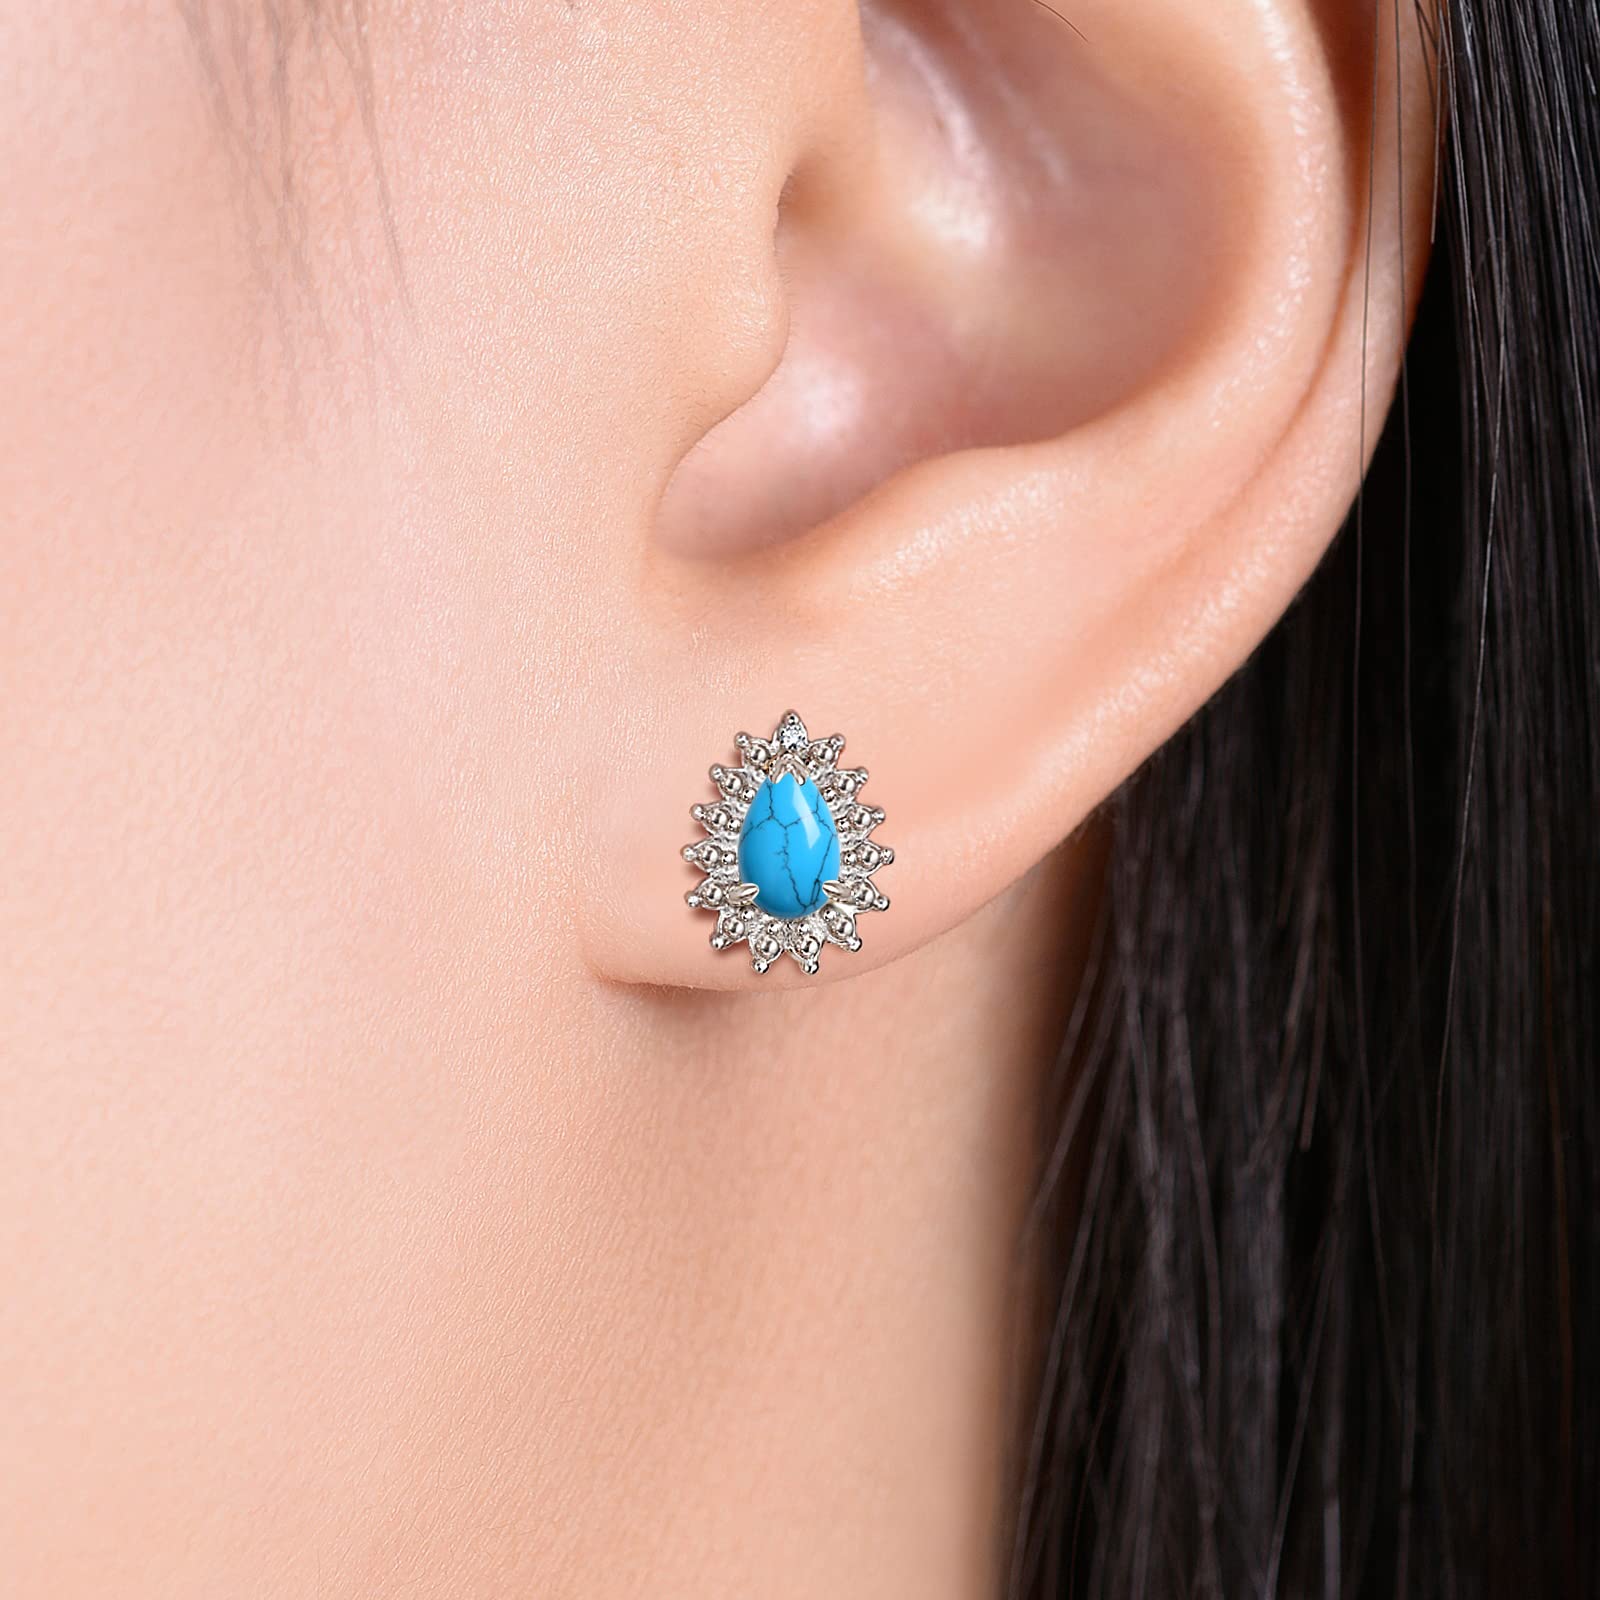 RYLOS 14K White Gold Halo Stud Earrings - 6X4MM Pear Shape Gemstone & Diamonds - Exquisite Birthstone Jewelry for Women & Girls